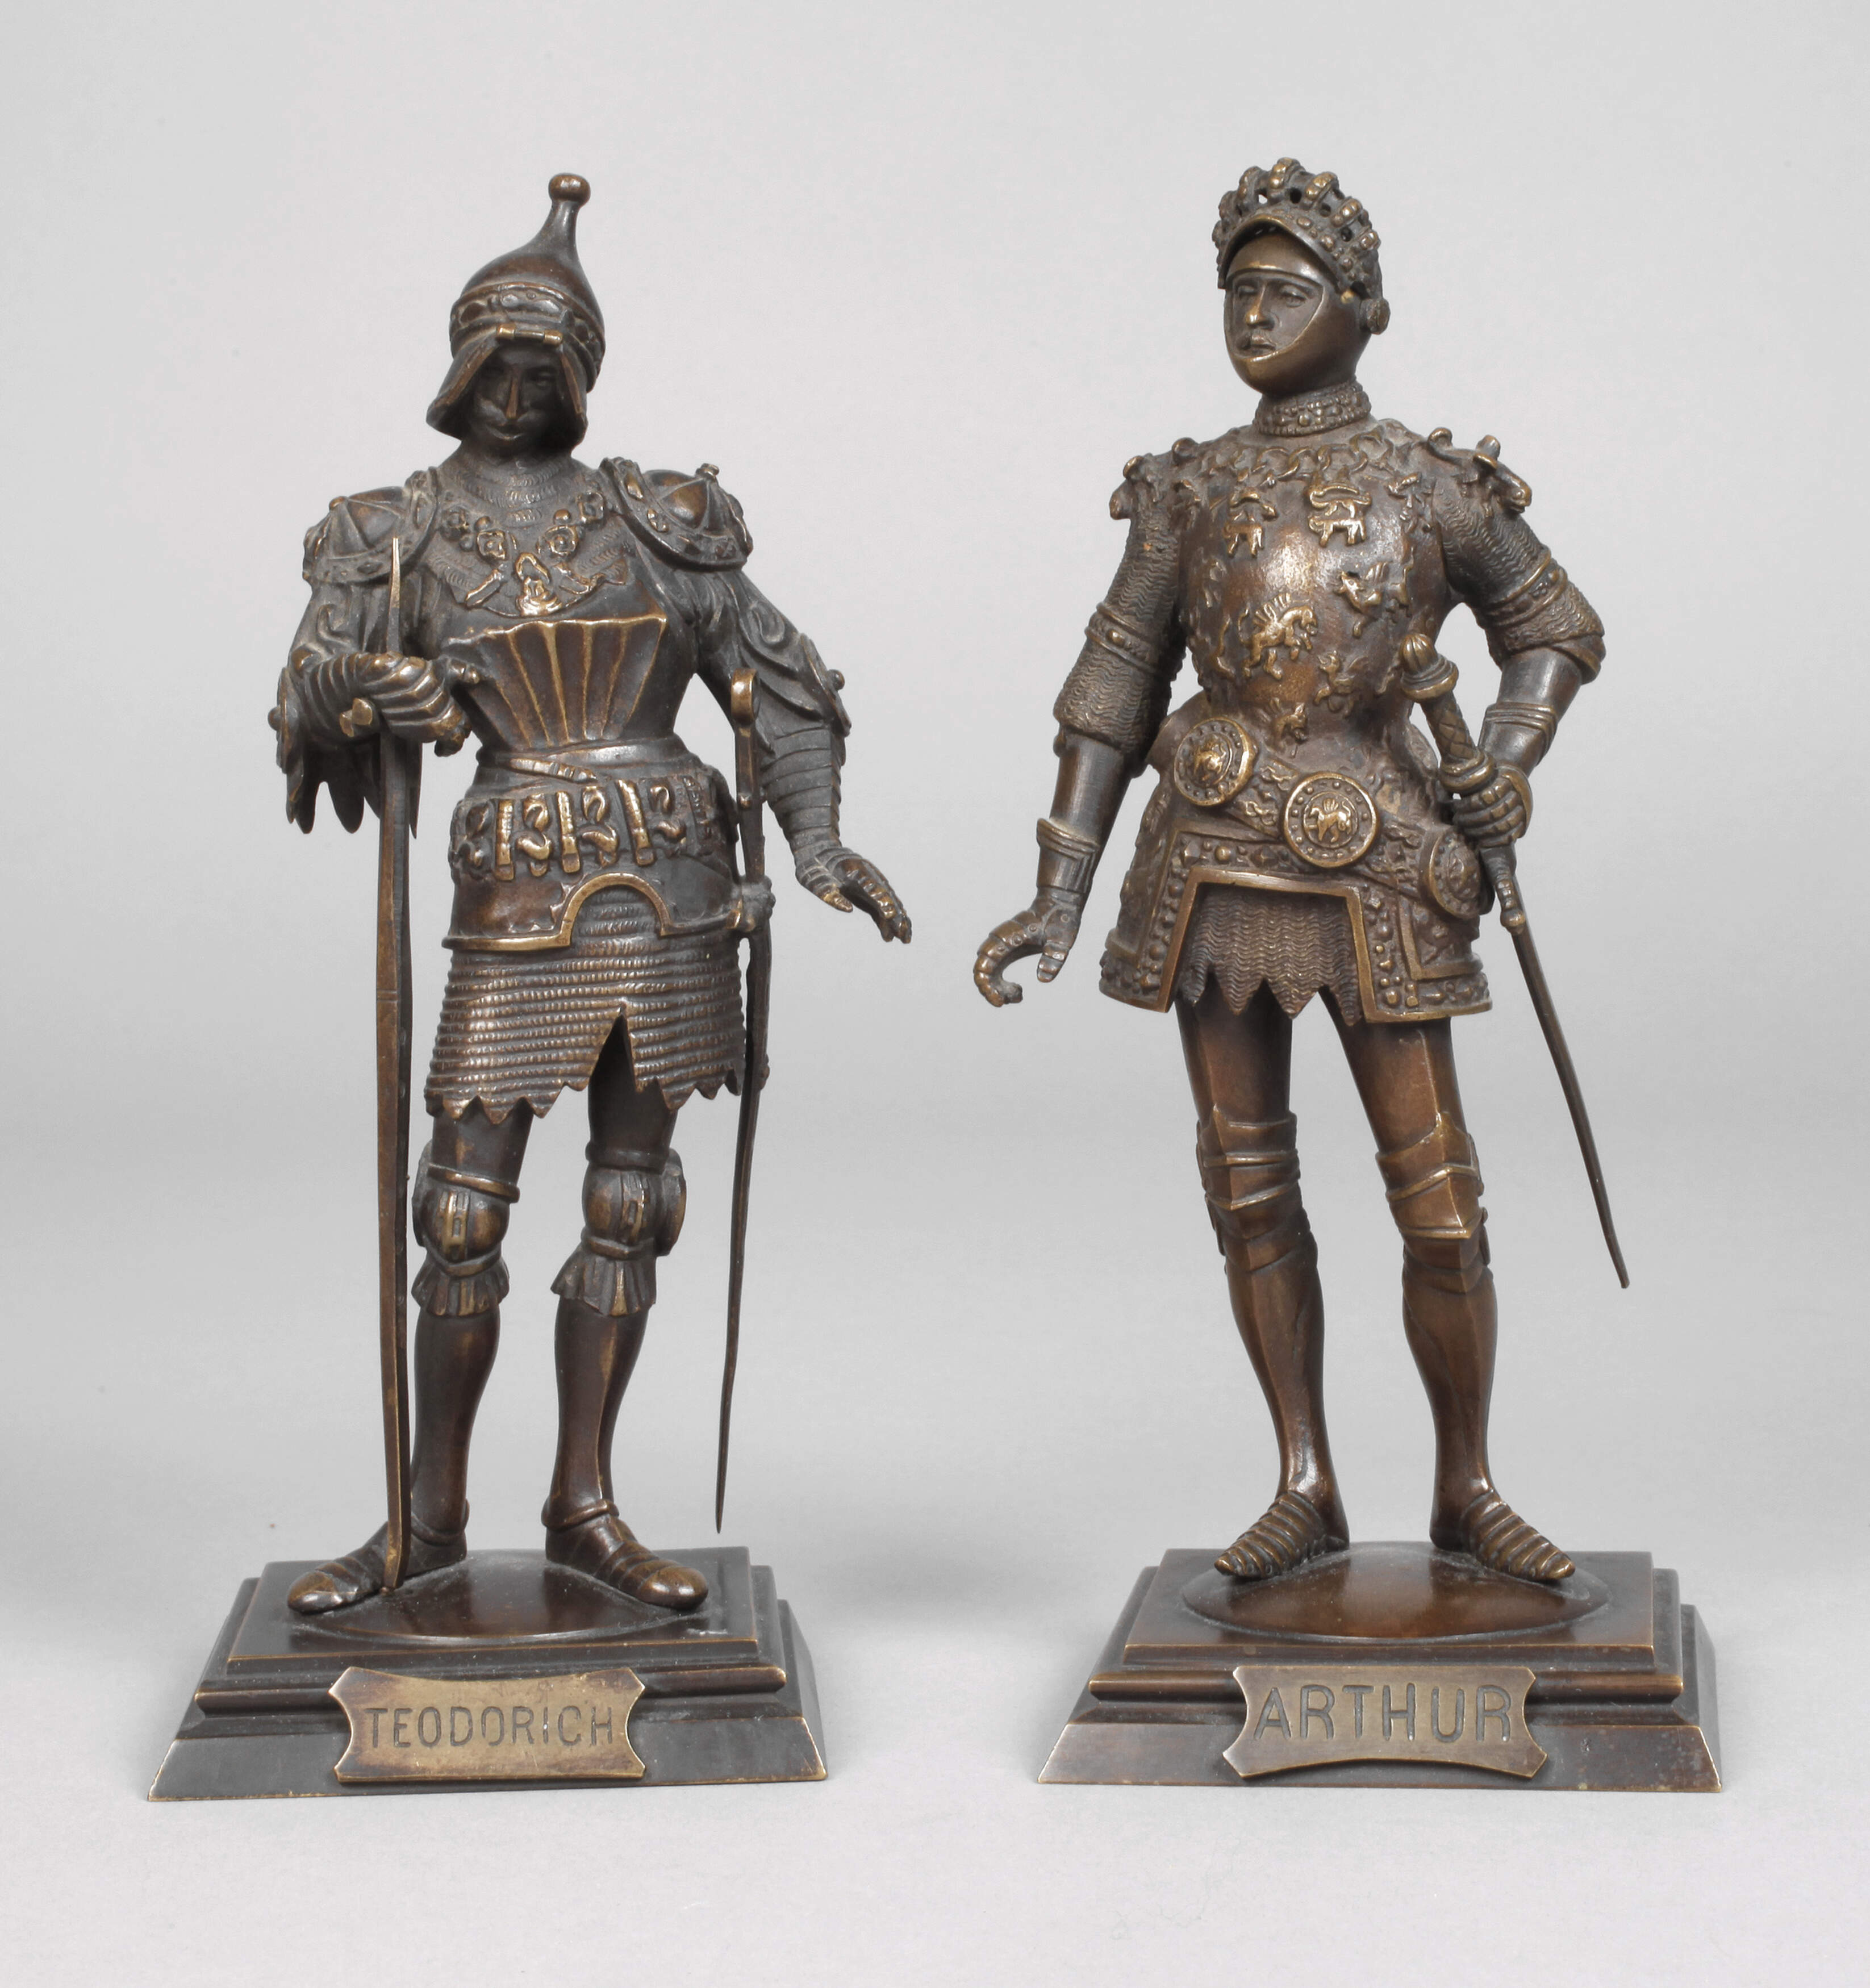 Könige Theoderich & Arthur